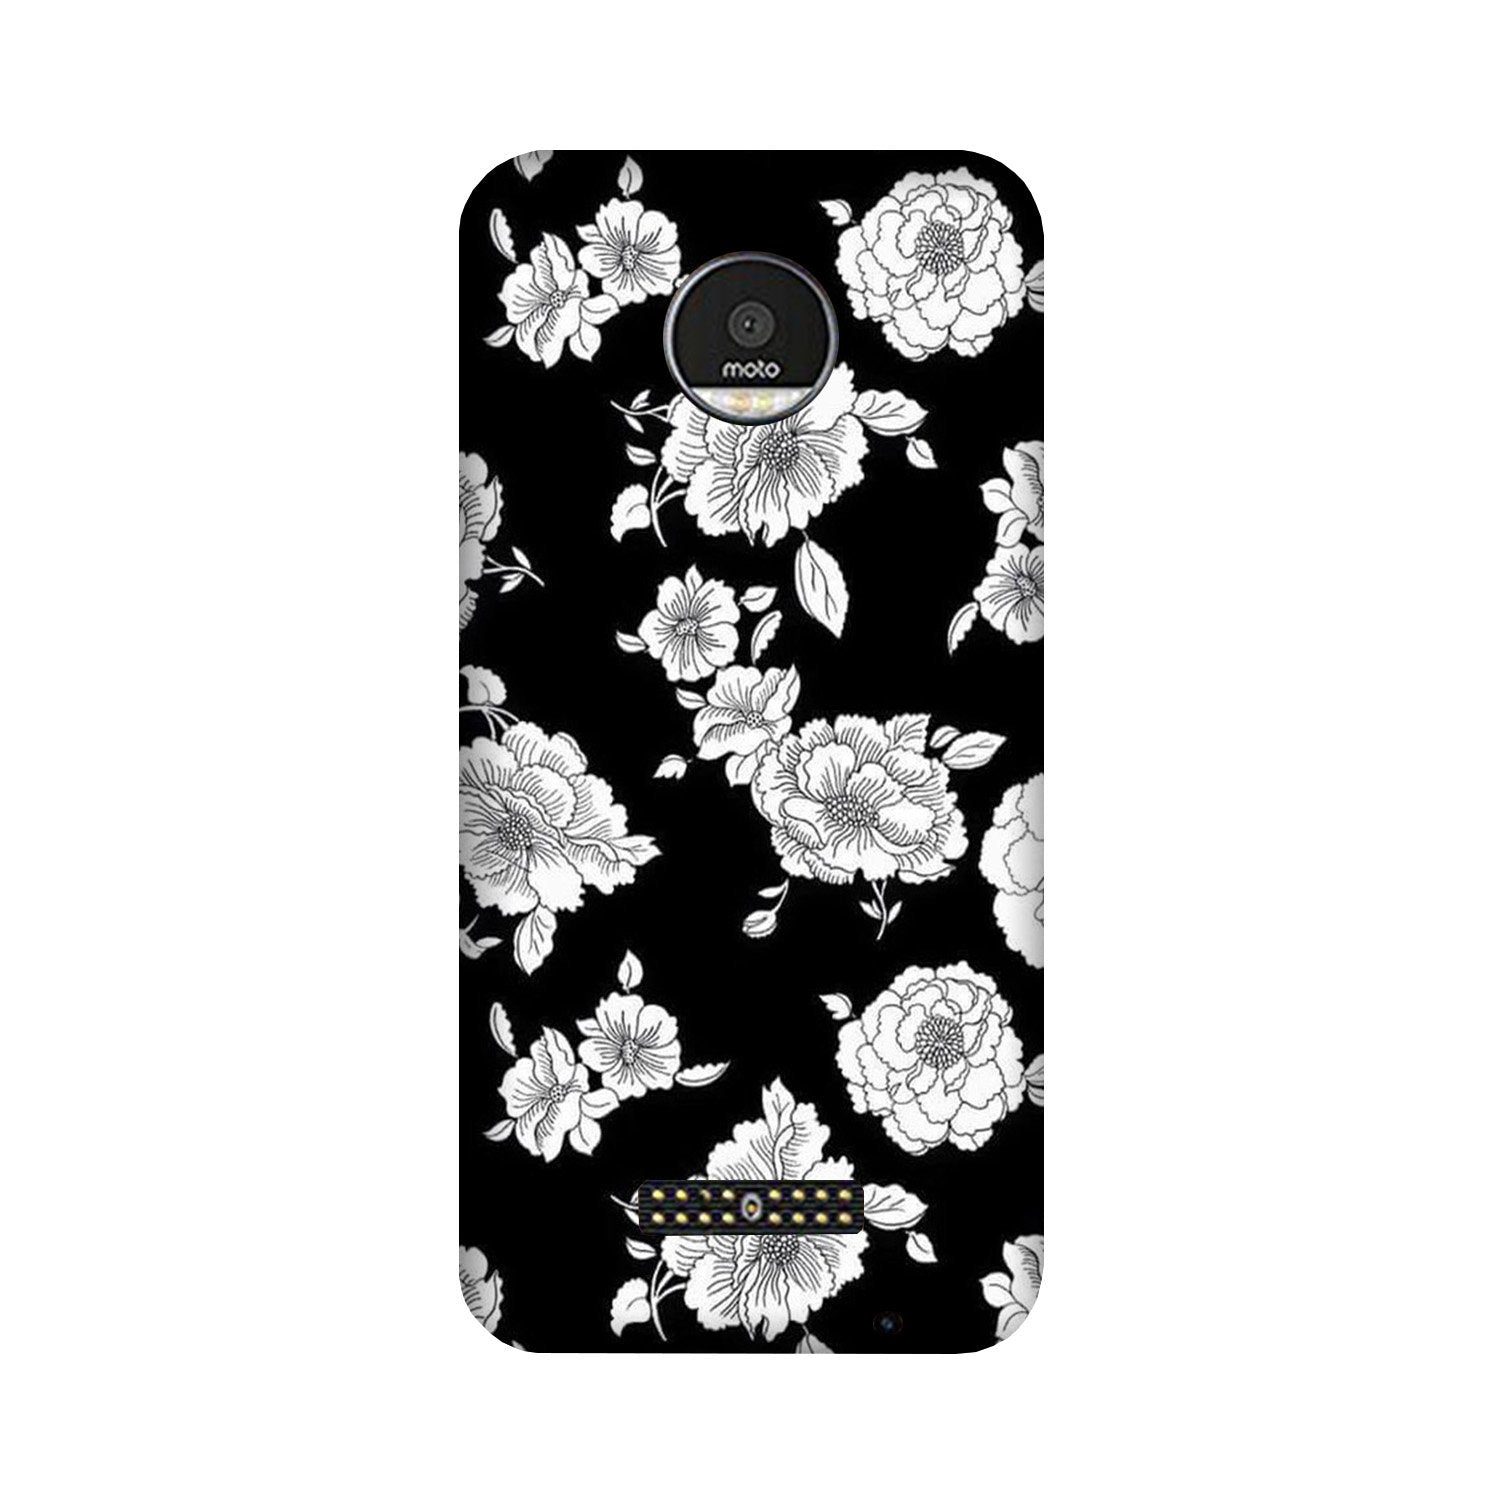 White flowers Black Background Case for Moto Z Play